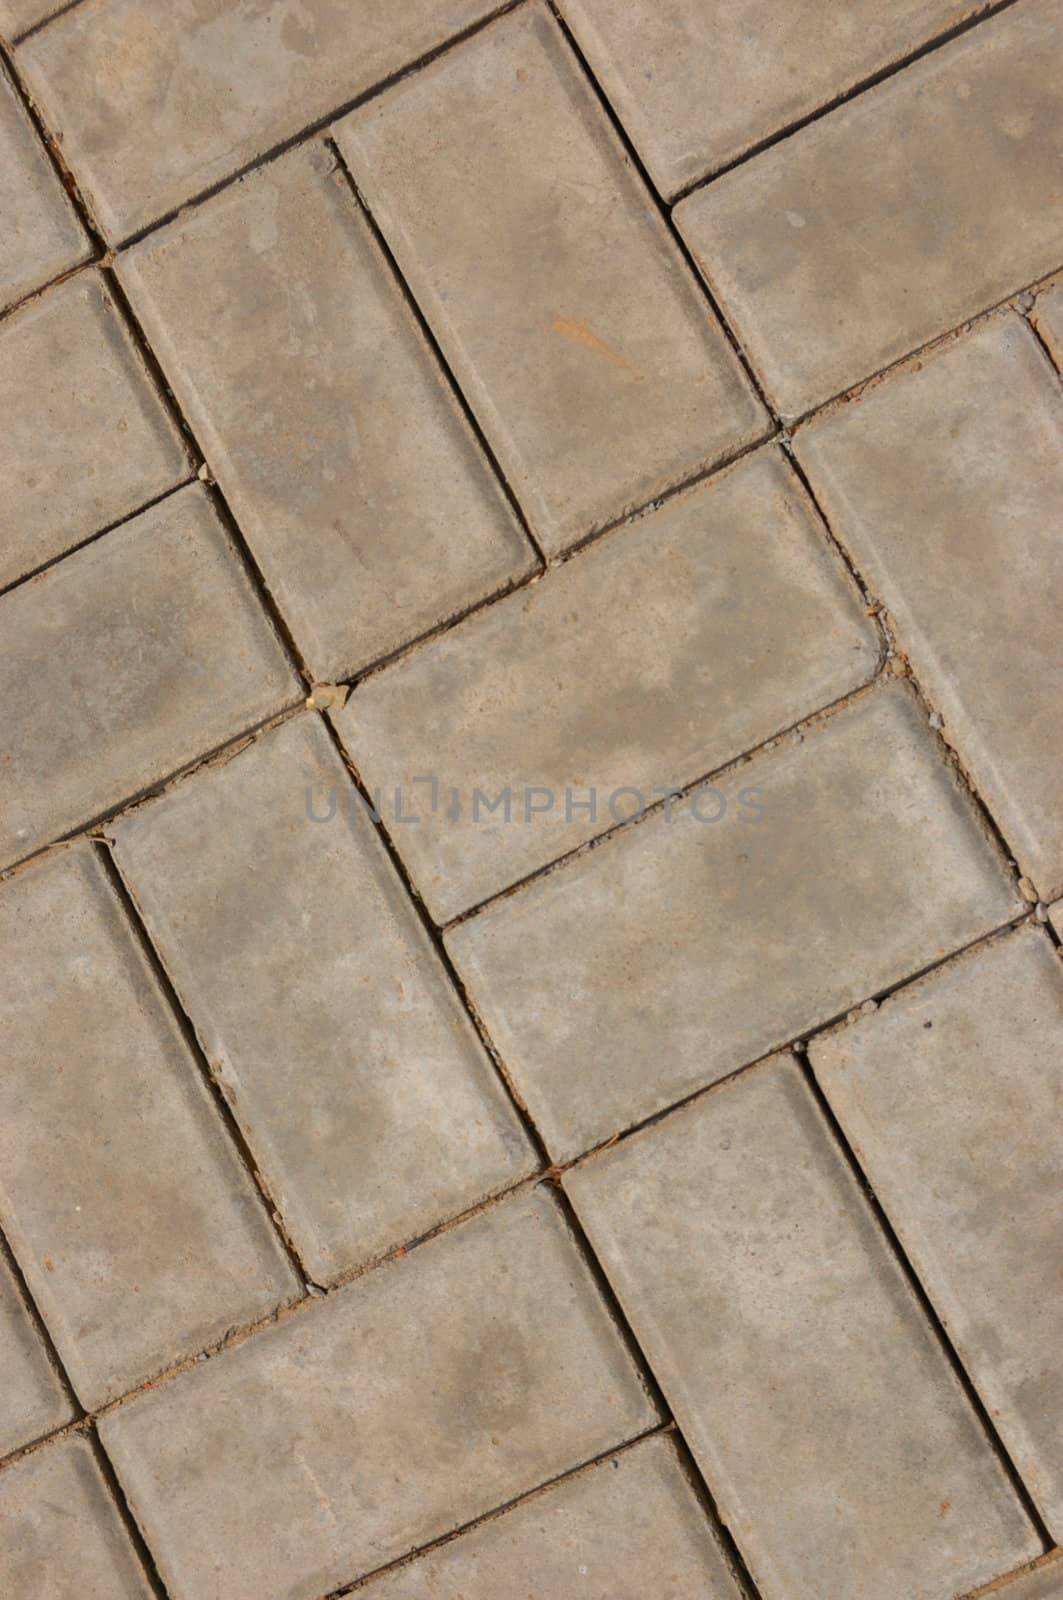 new pavement of stoneblocks (bricks) of grey color